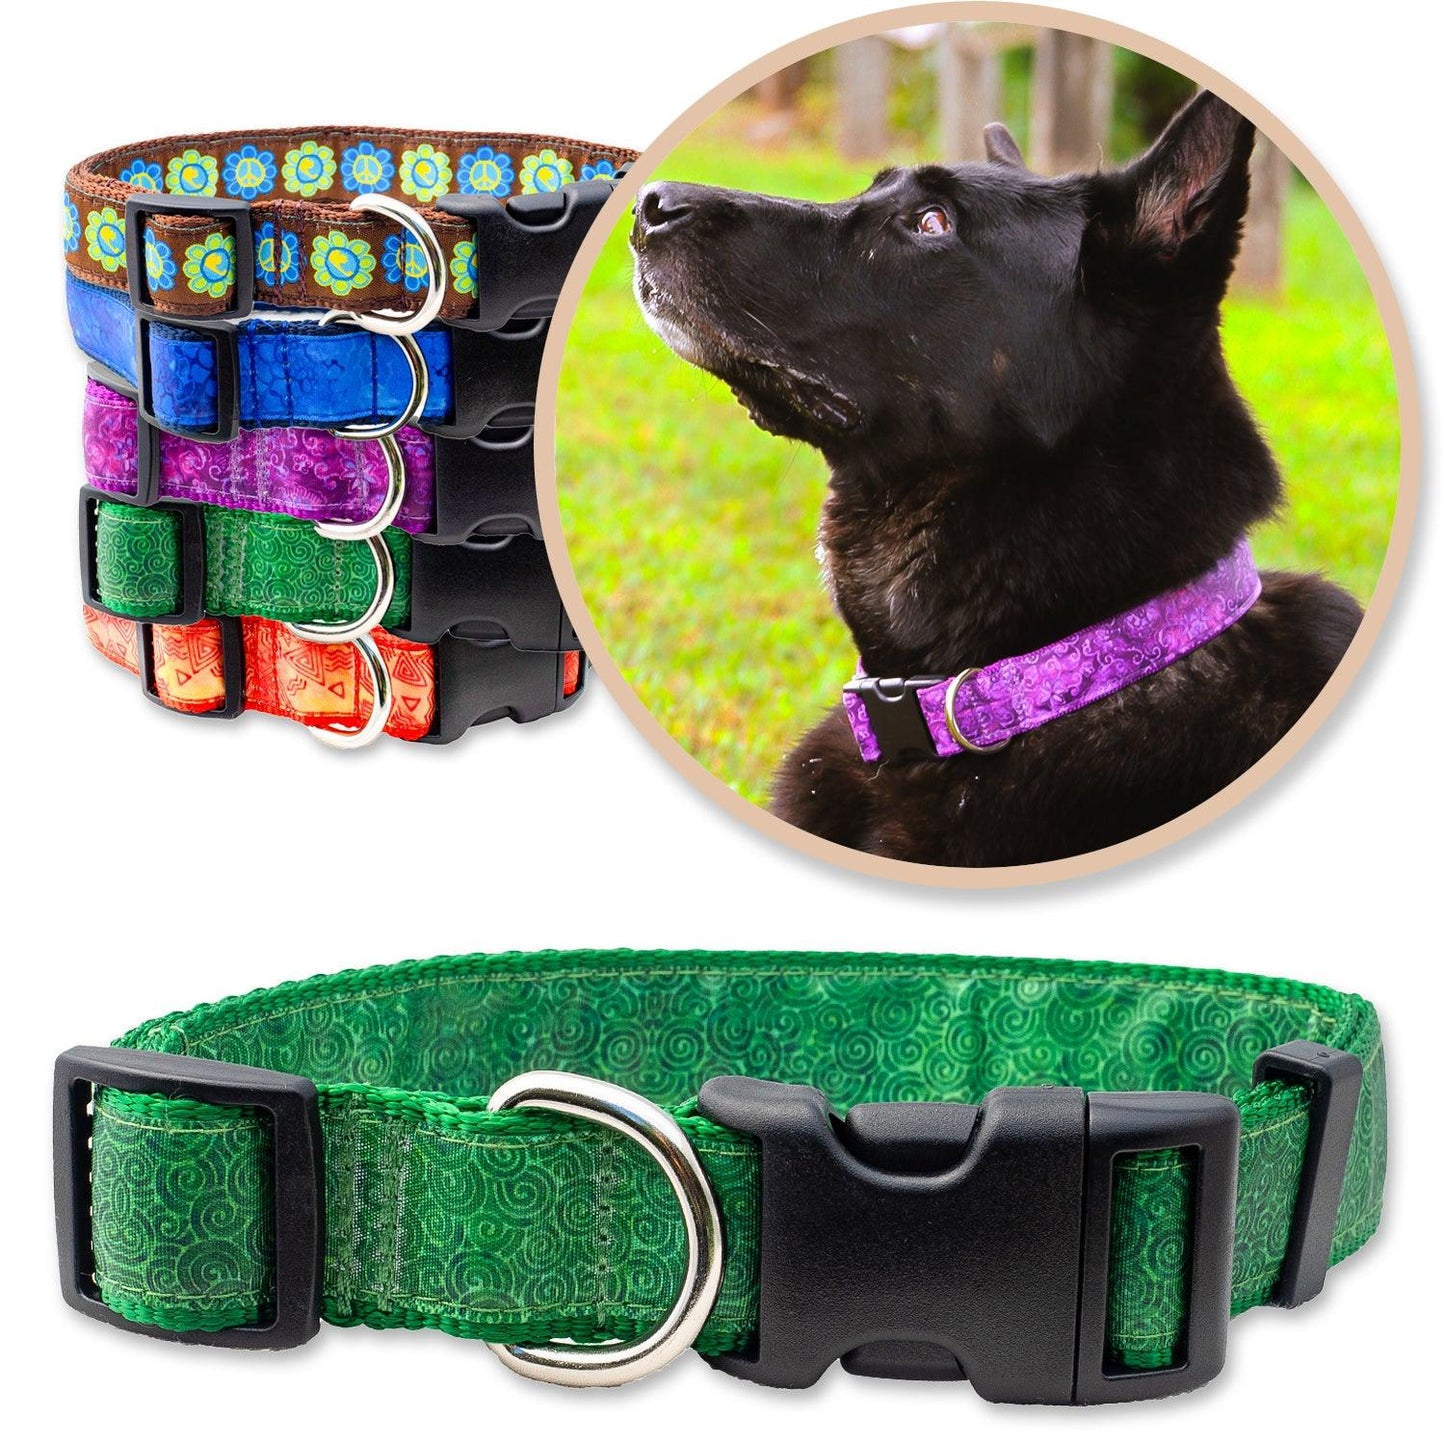 Green batik inspired dog collar shown with a black dog